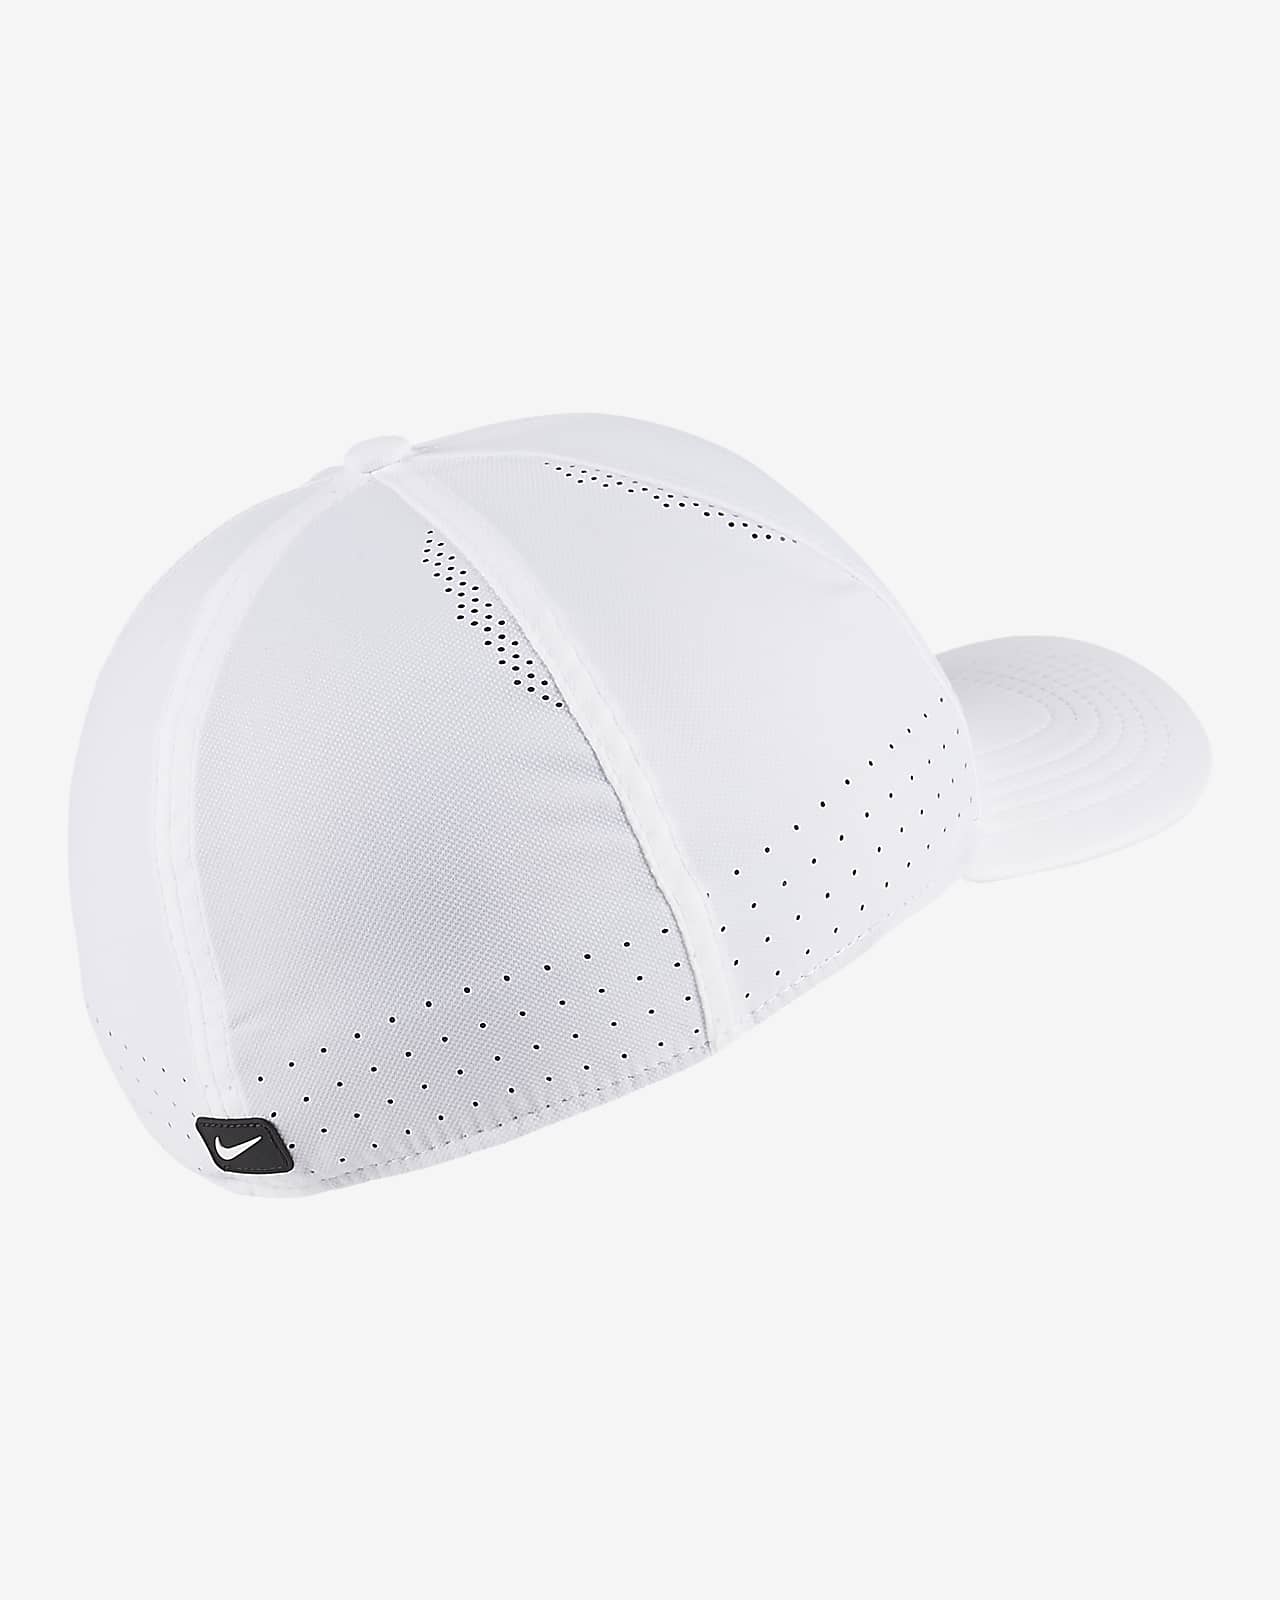 Nike AeroBill Classic99 Unisex Golf Hat